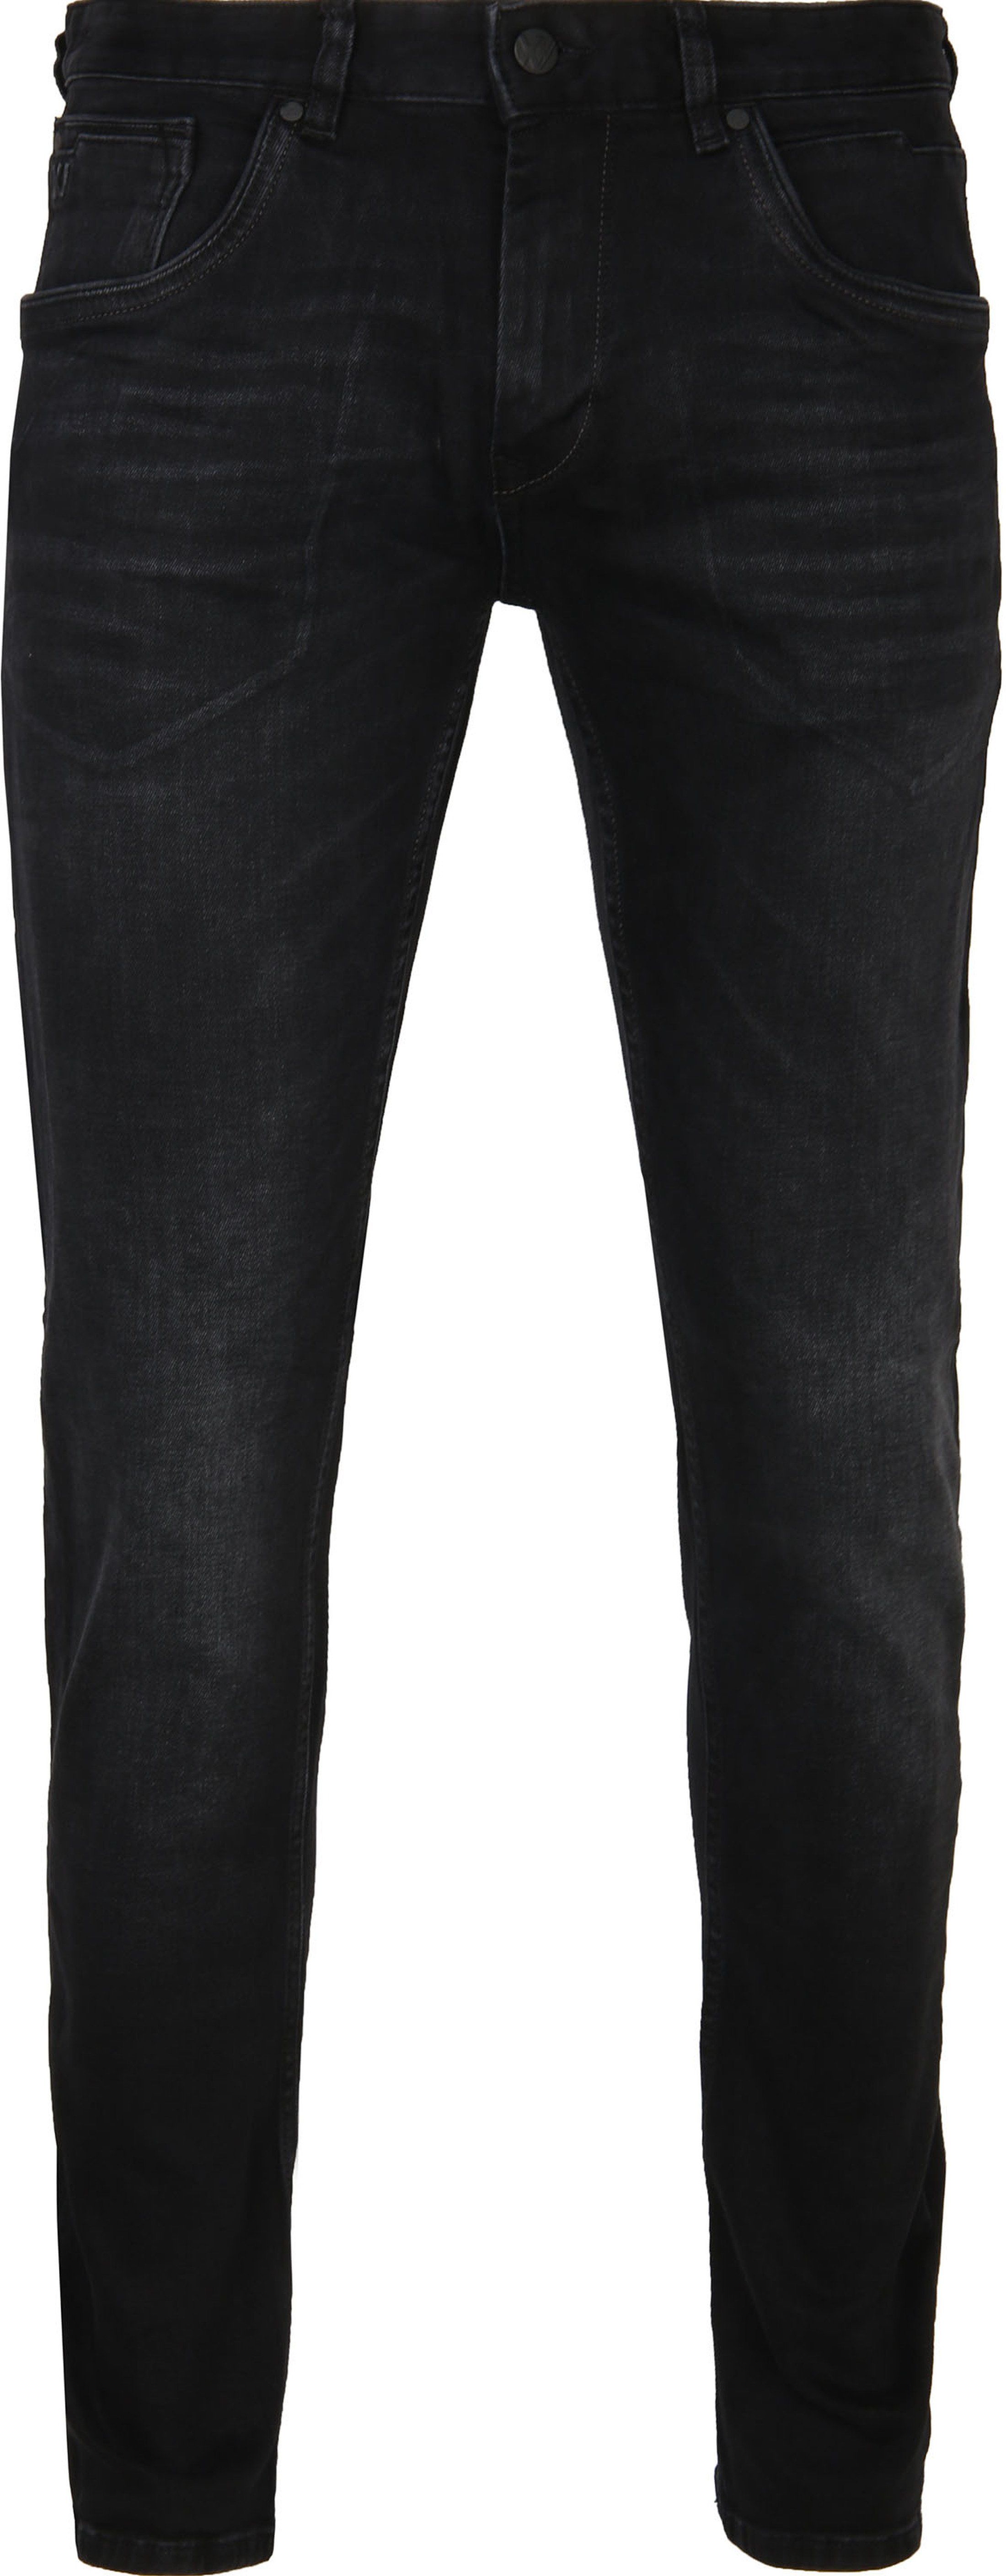 PME Legend Denim Jeans Black size W 31